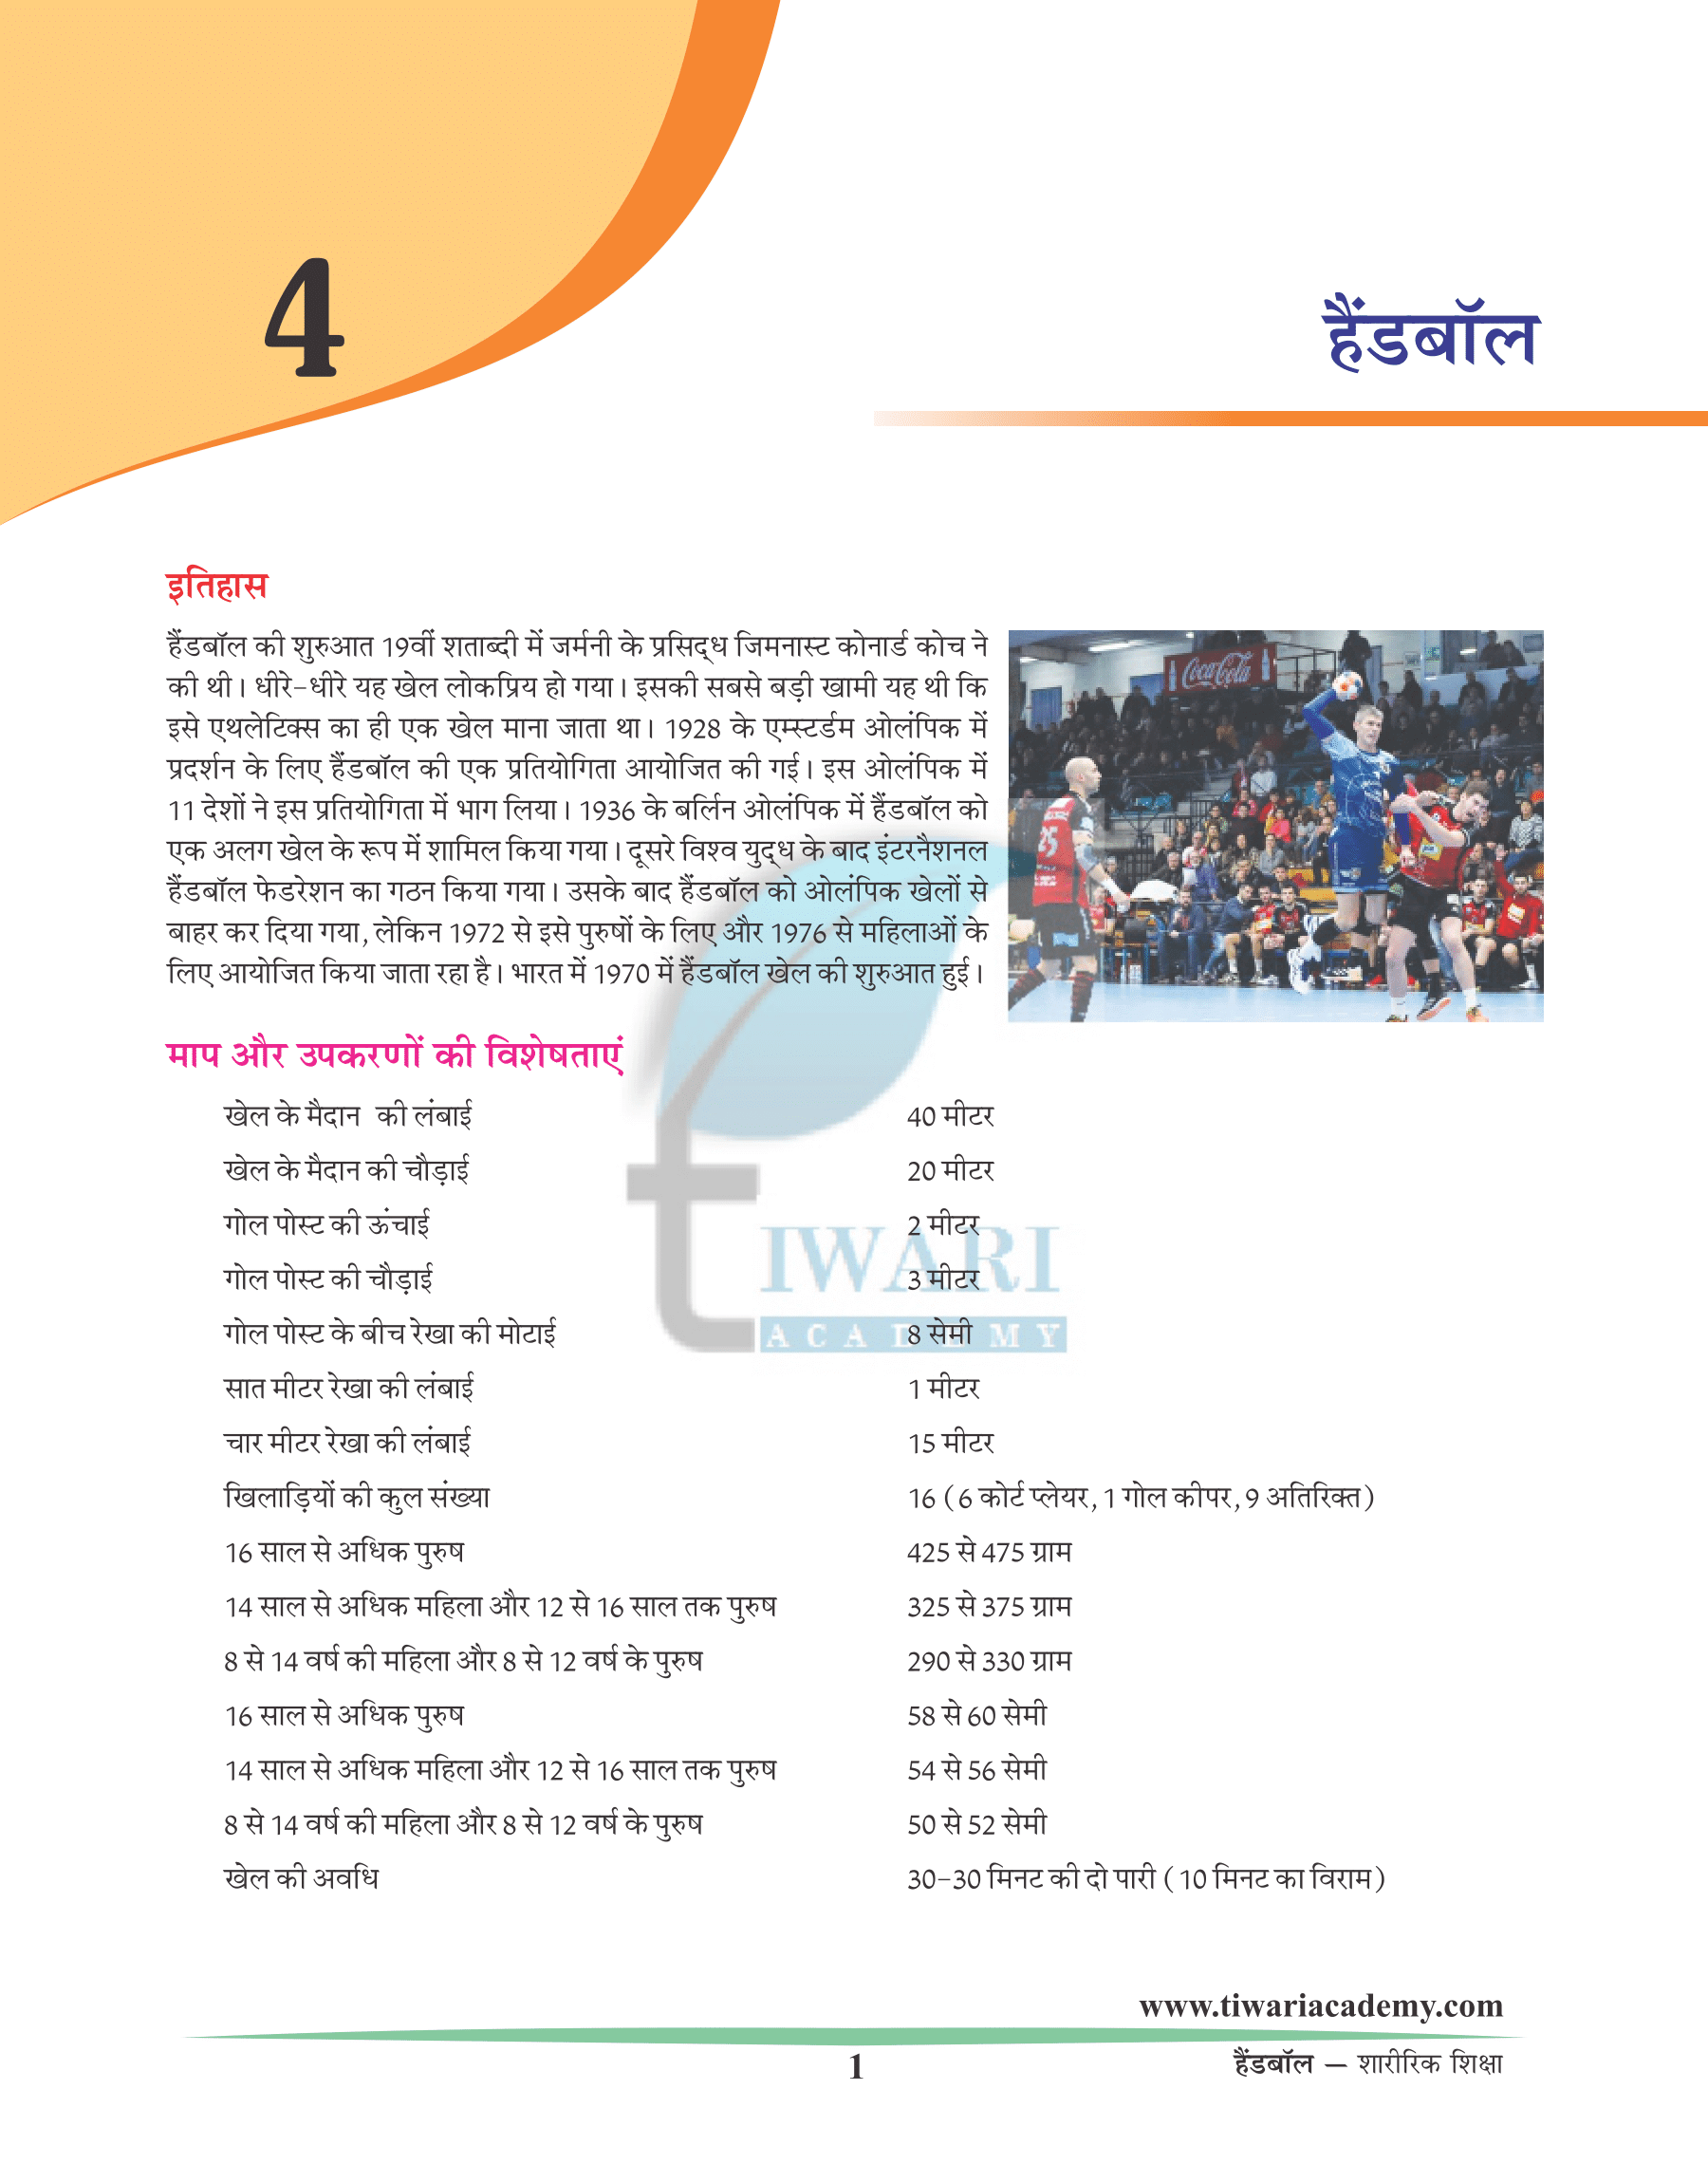 Main events of Handball